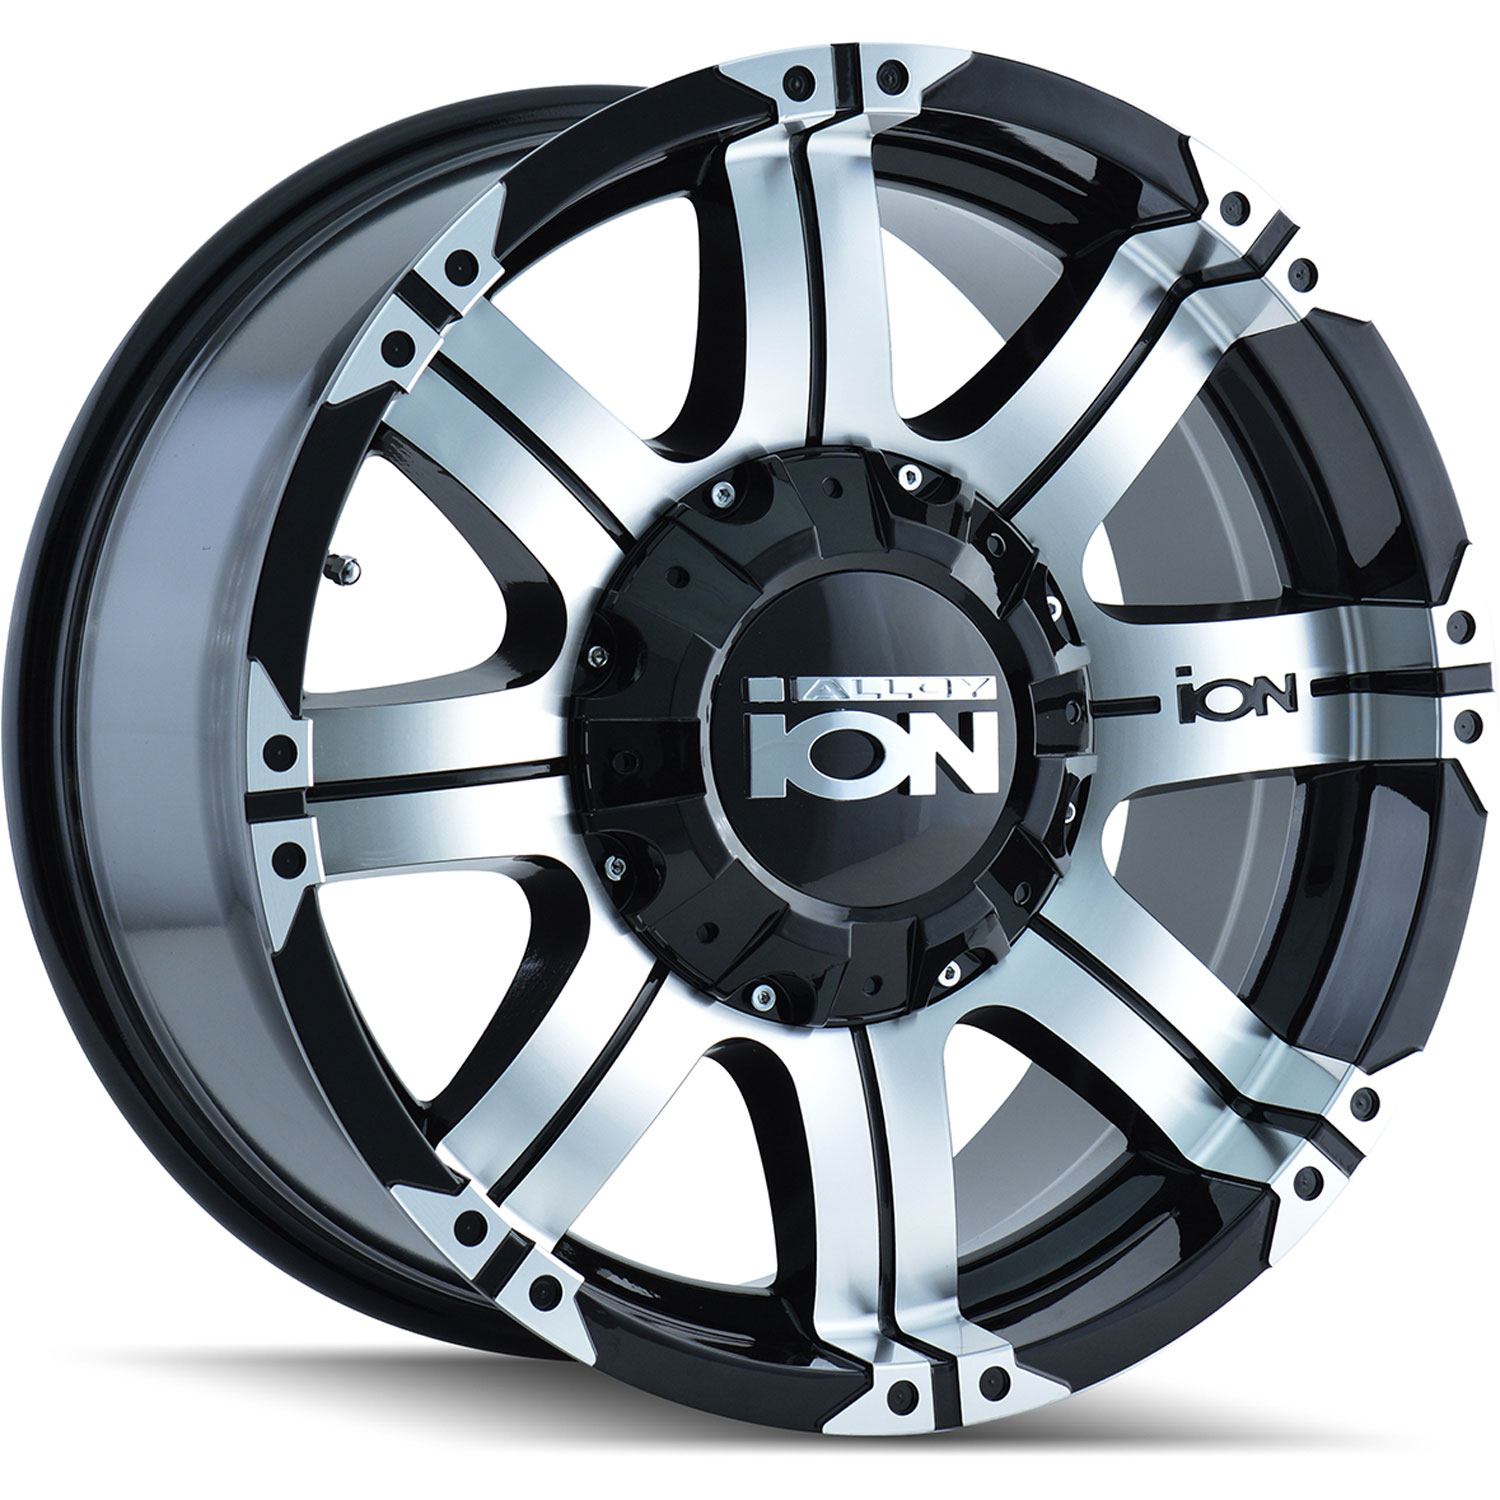 Ion 187 Series Wheel Size: 16" x 8"